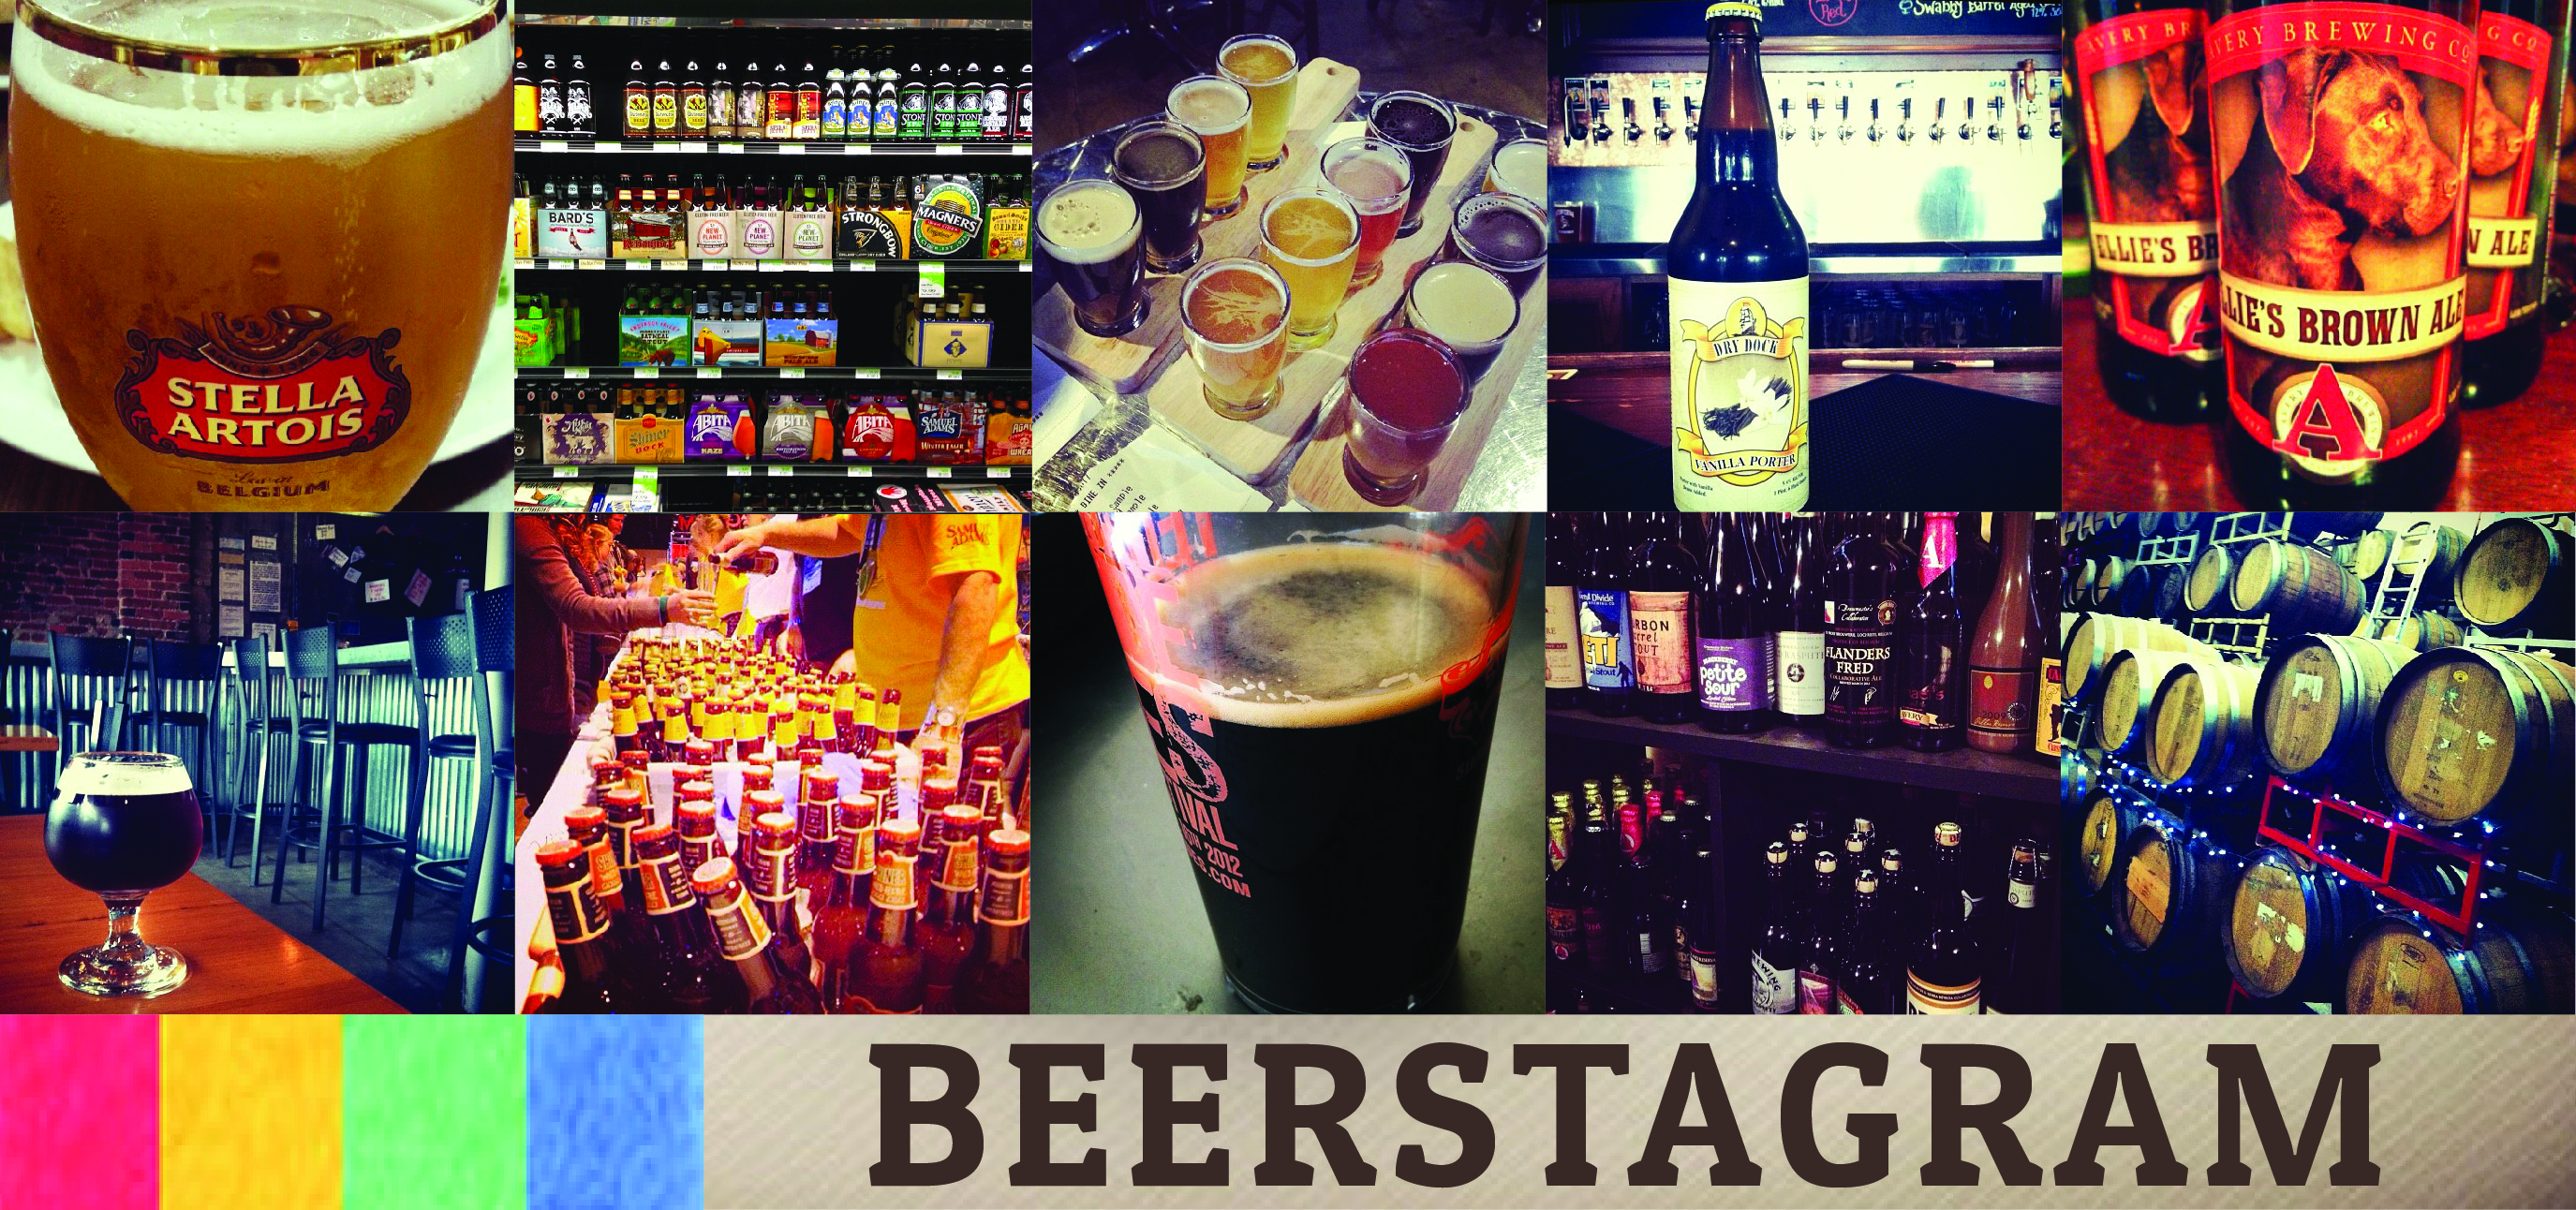 Beerstagrams 5/10 – 5/17 2013